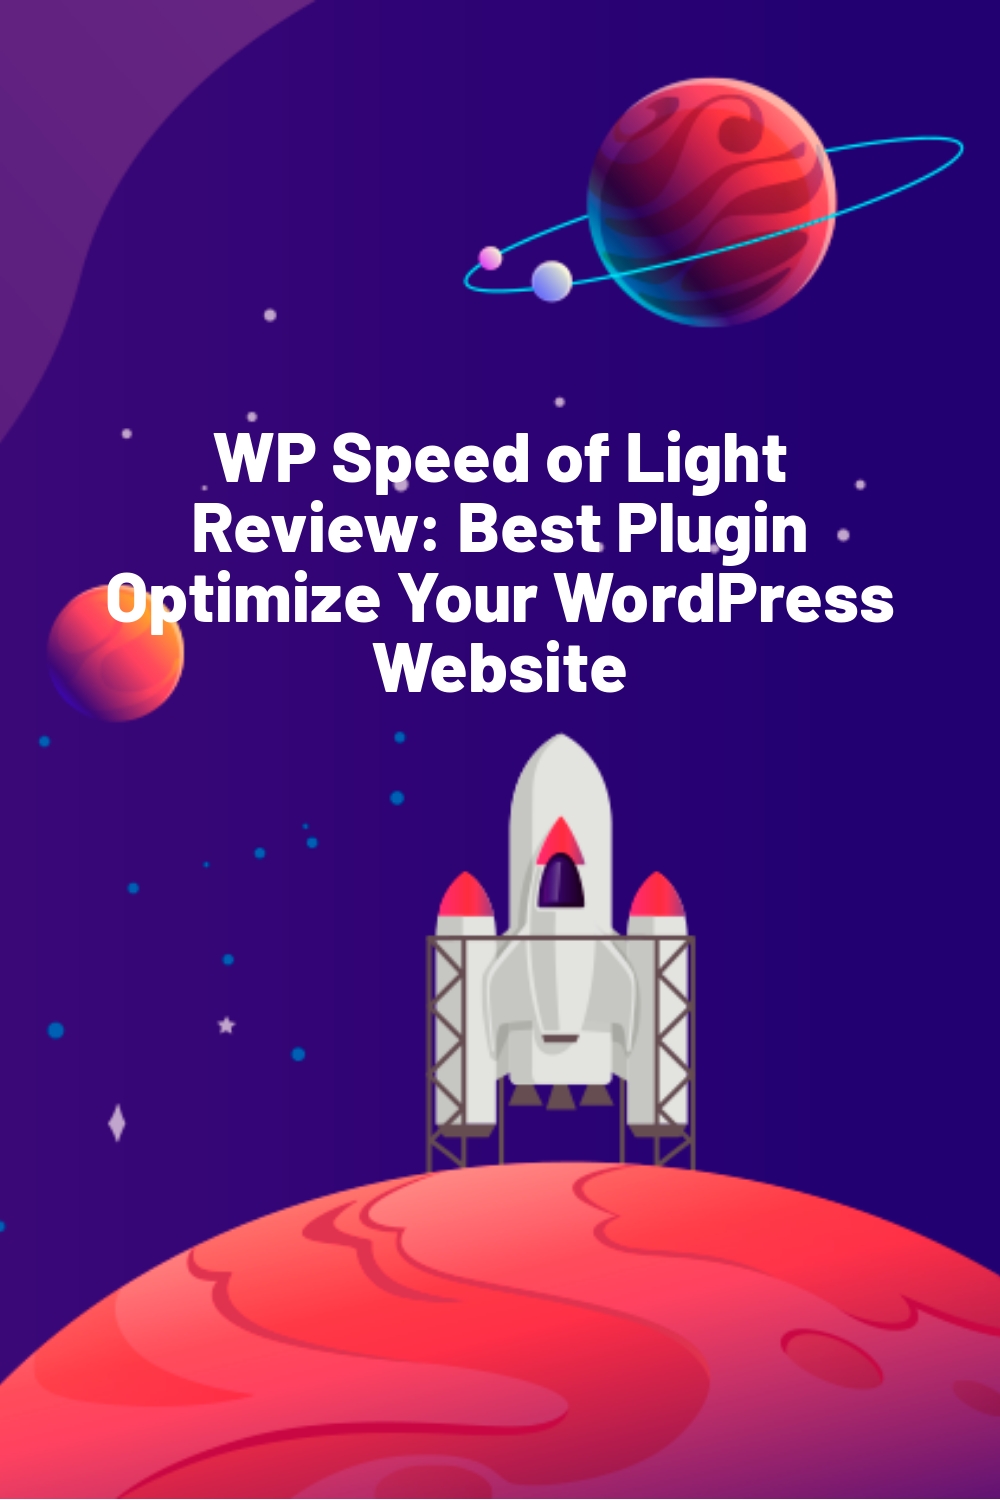 WP Speed of Light Review: Best Plugin Optimize Your WordPress Website